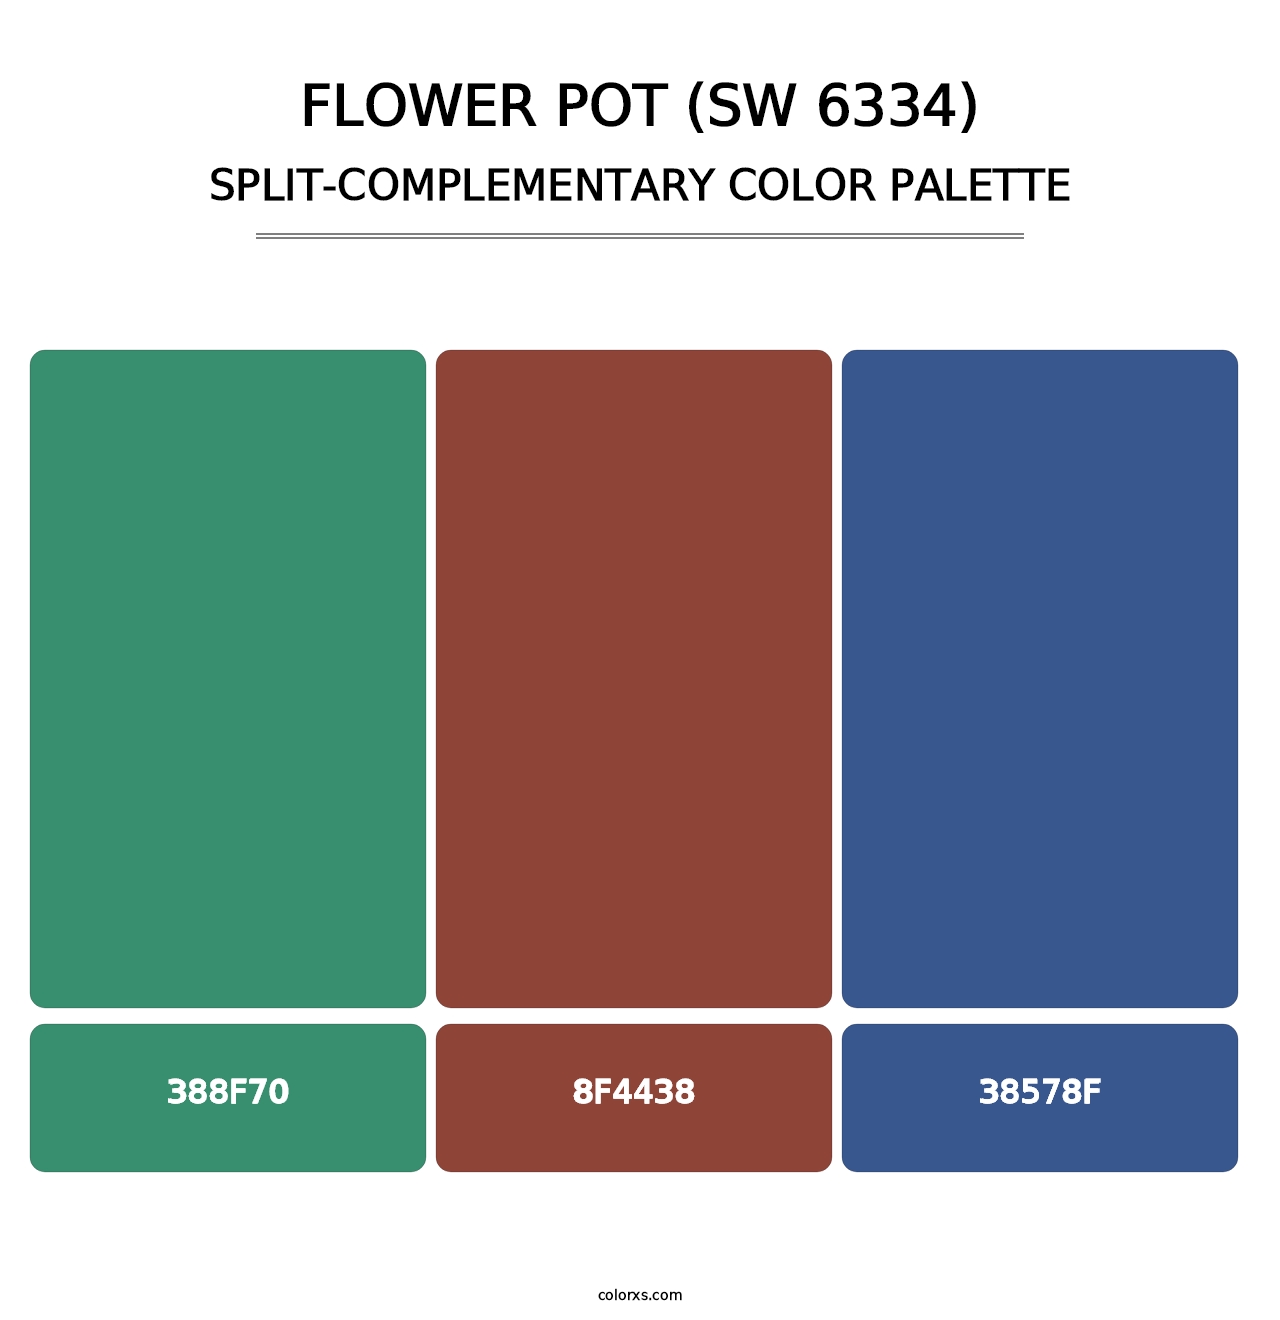 Flower Pot (SW 6334) - Split-Complementary Color Palette